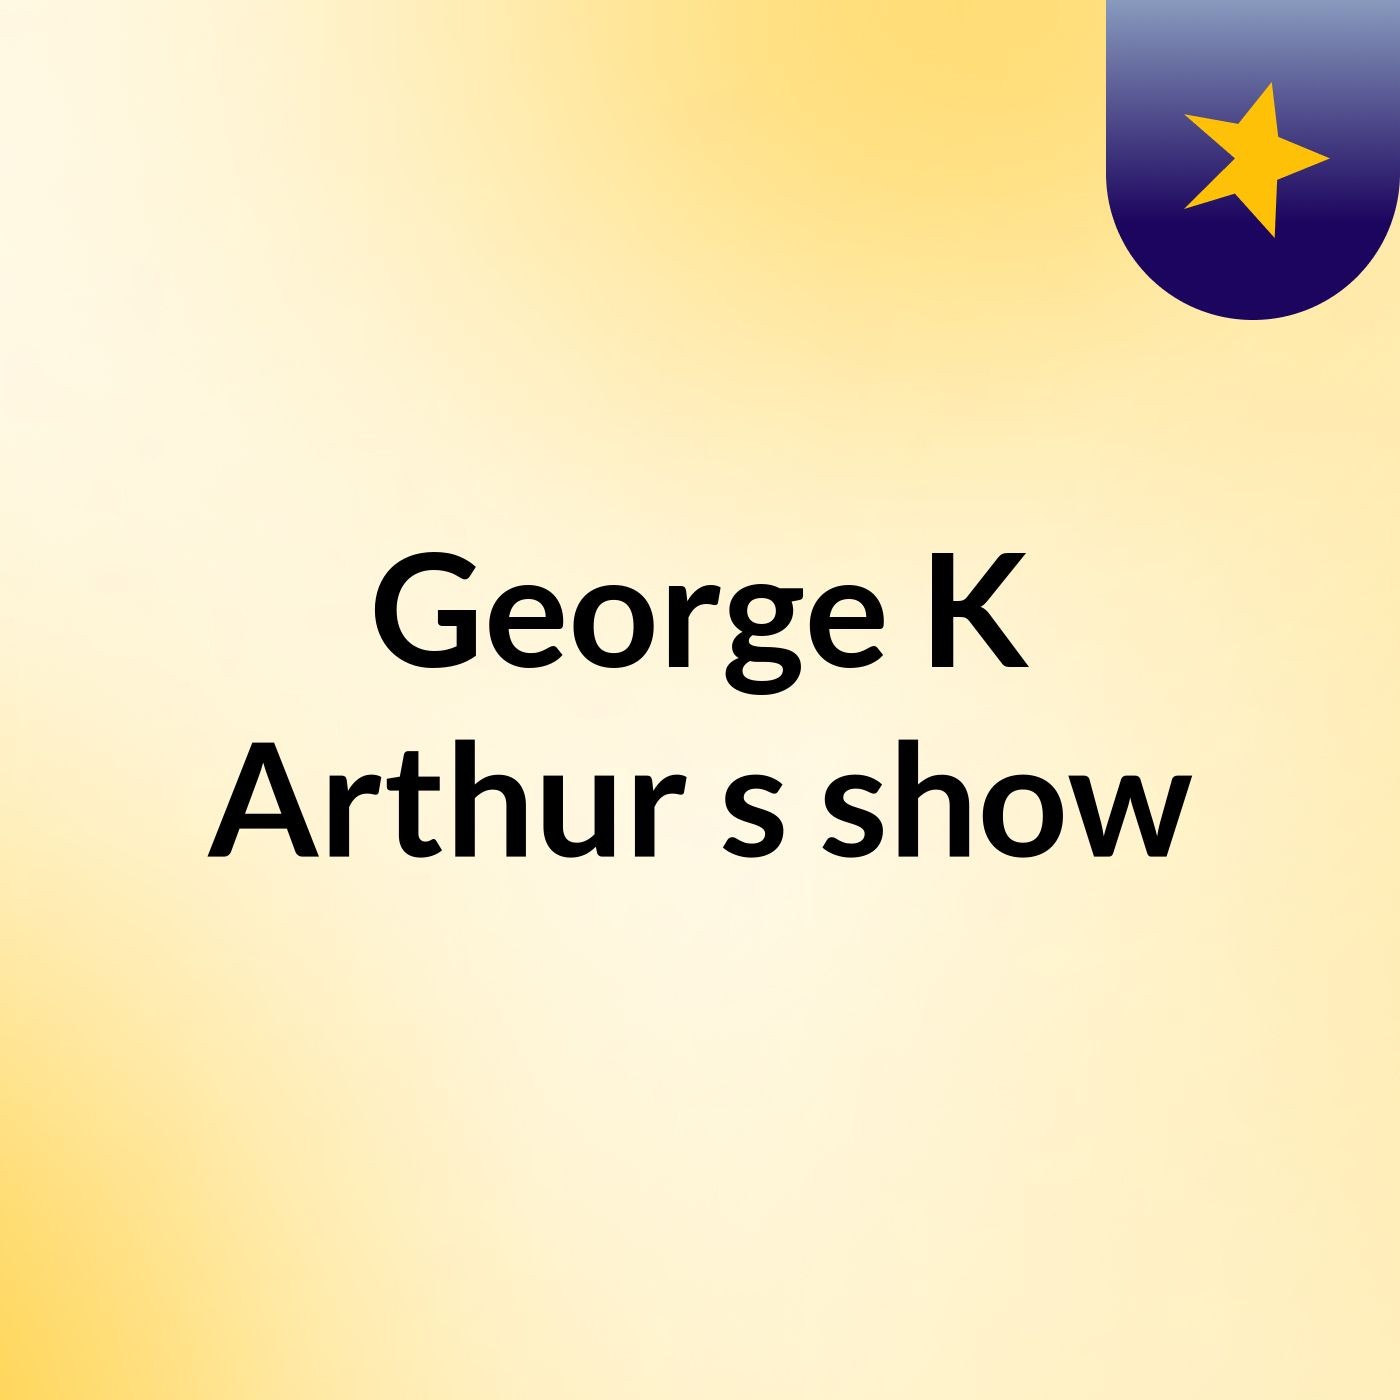 George K Arthur's show